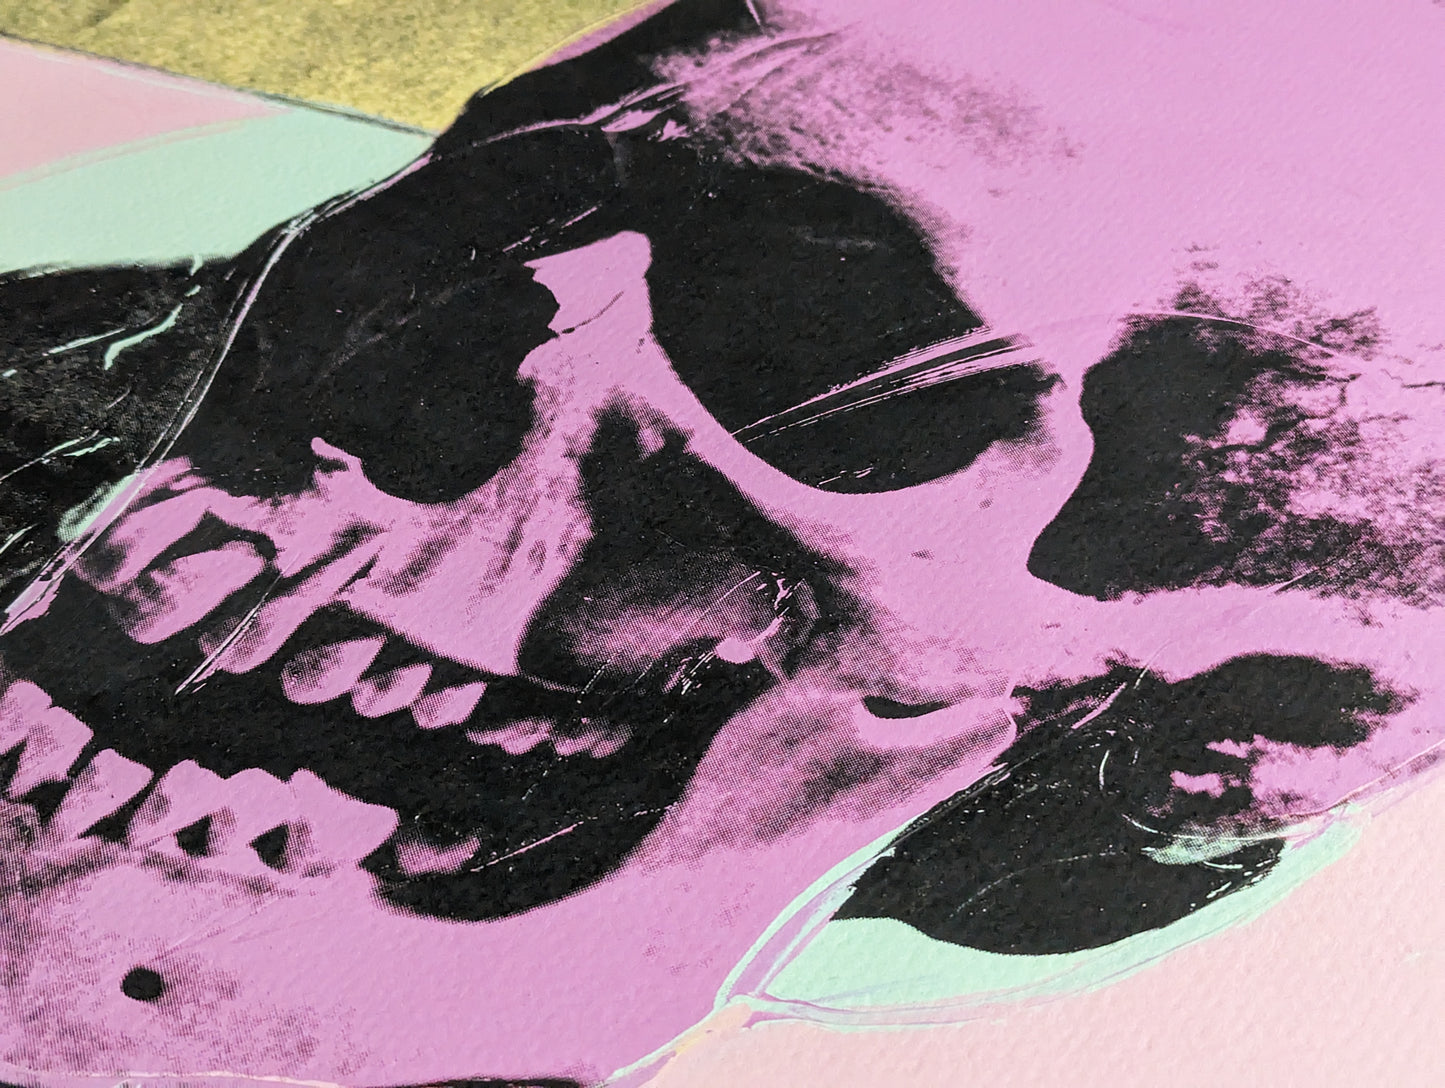 Andy Warhol - Skull (1980)